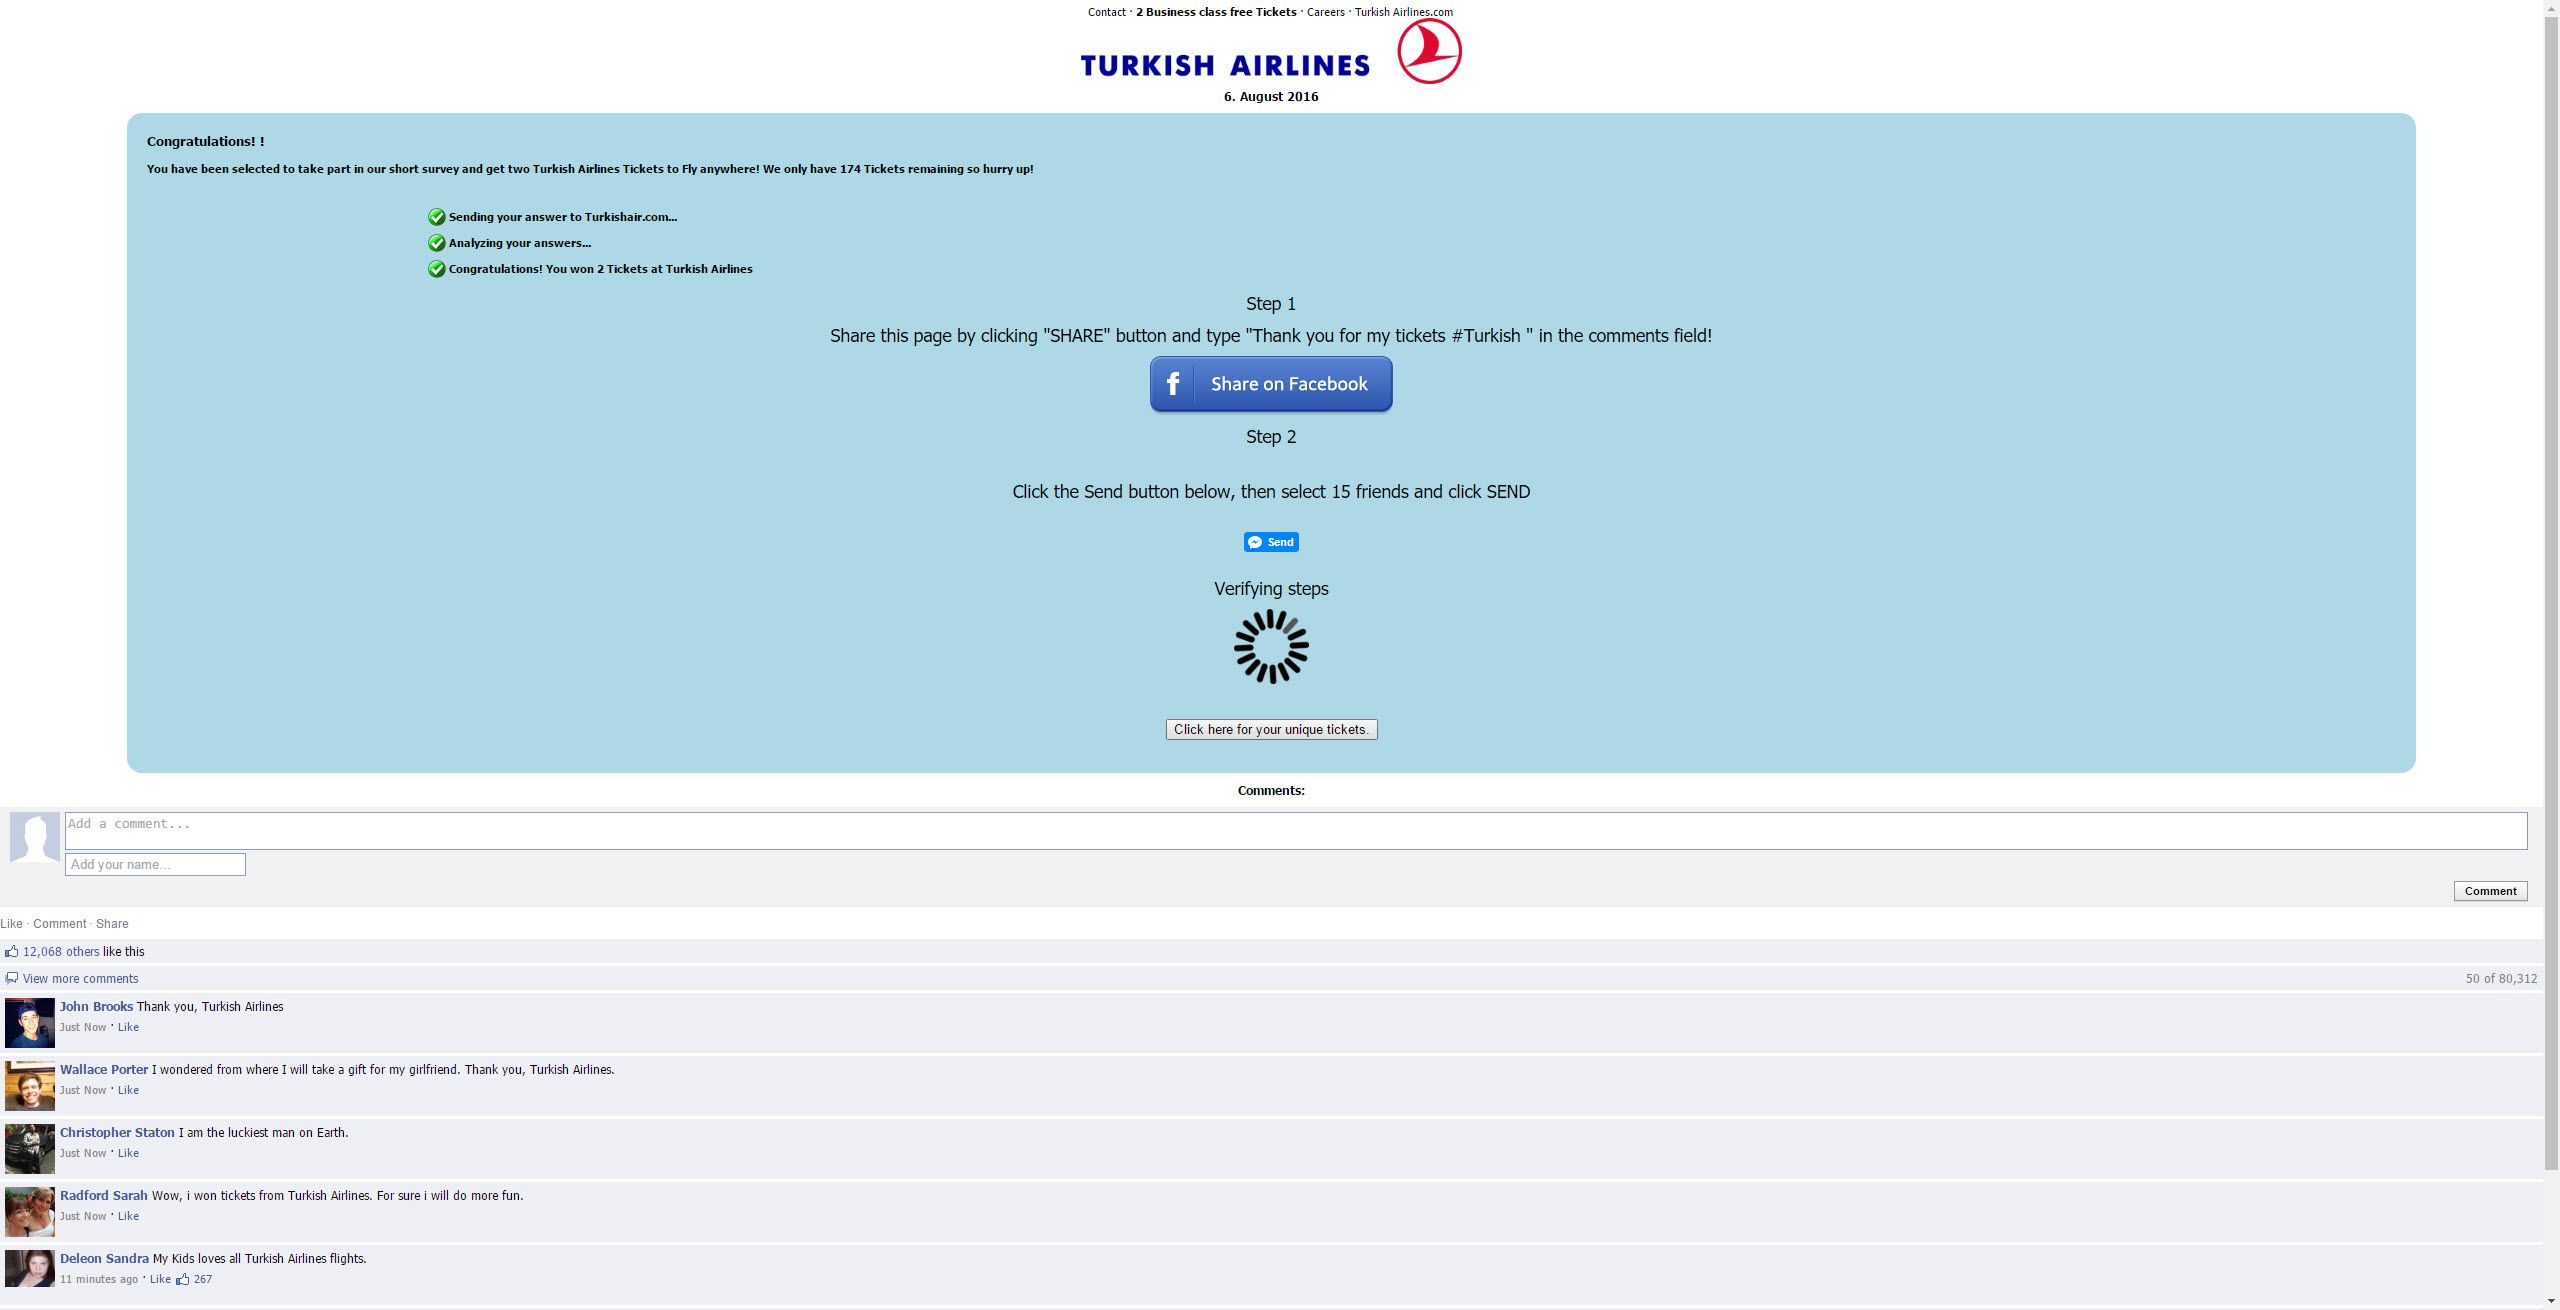 bedava-bilet-dolandiriciligi-turkish-airlines-2.jpg